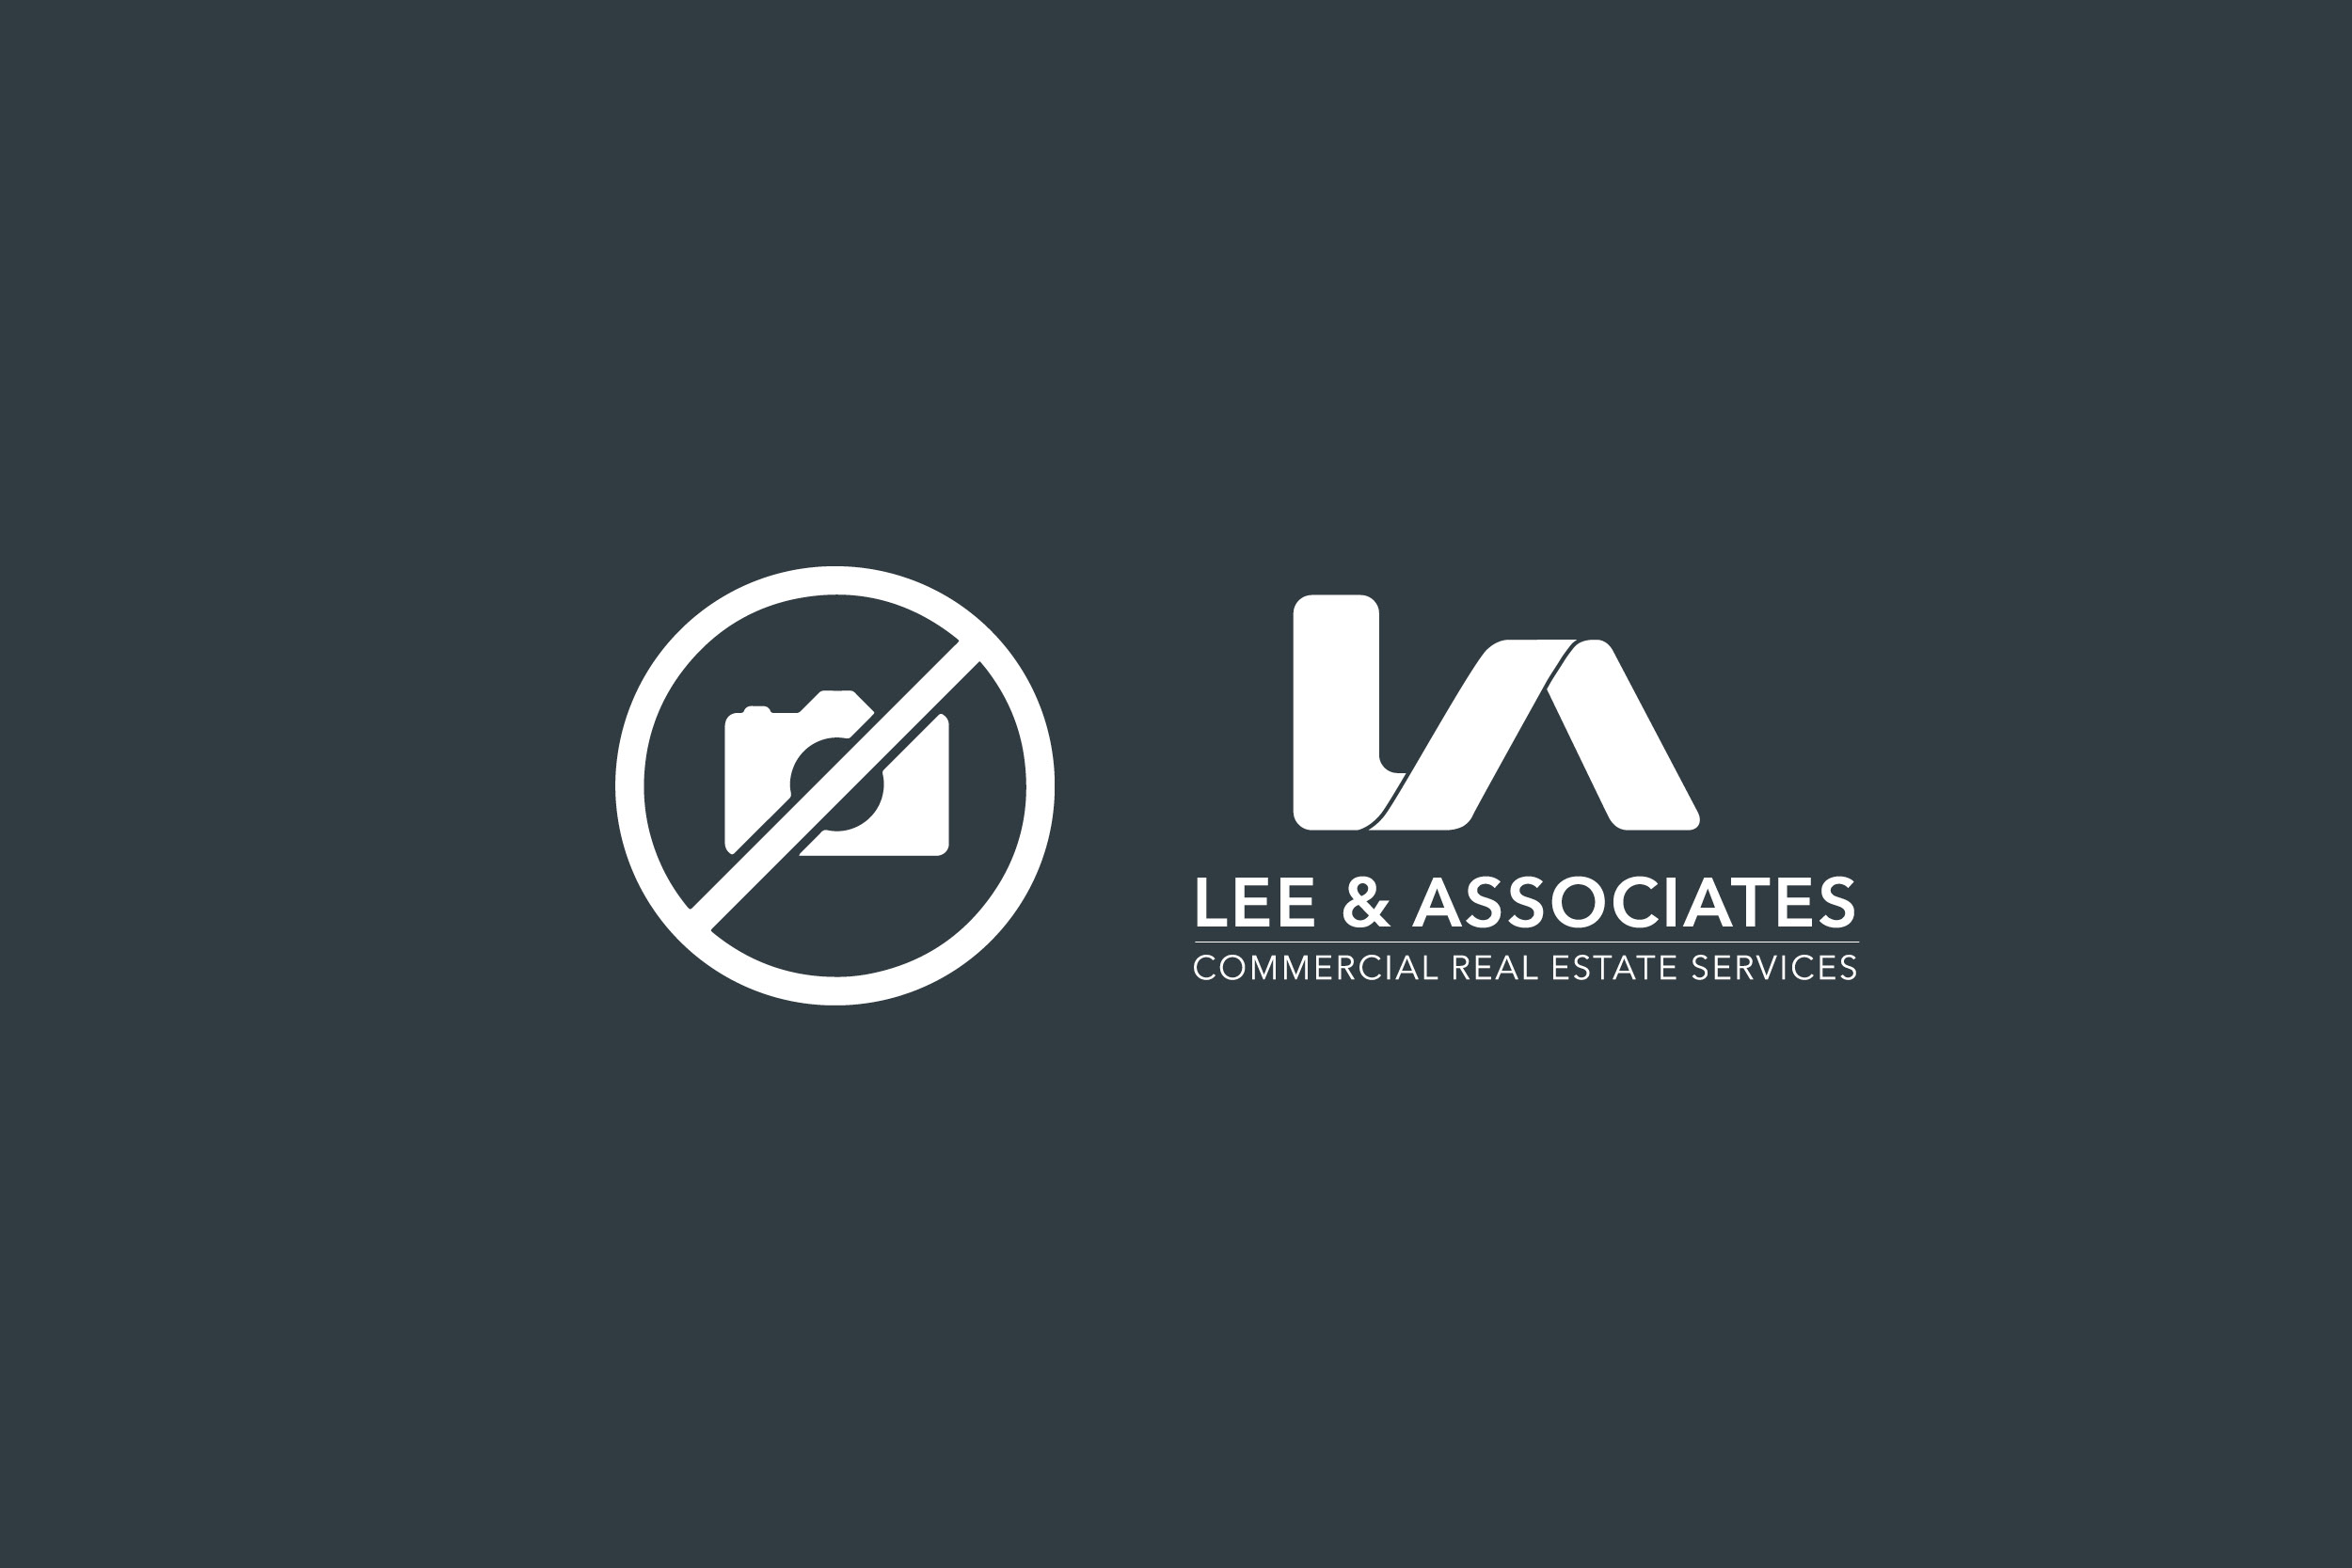 Lee & Associates Dallas Fort Worth Negotiates a 100,800 SF Industrial Sale Transaction